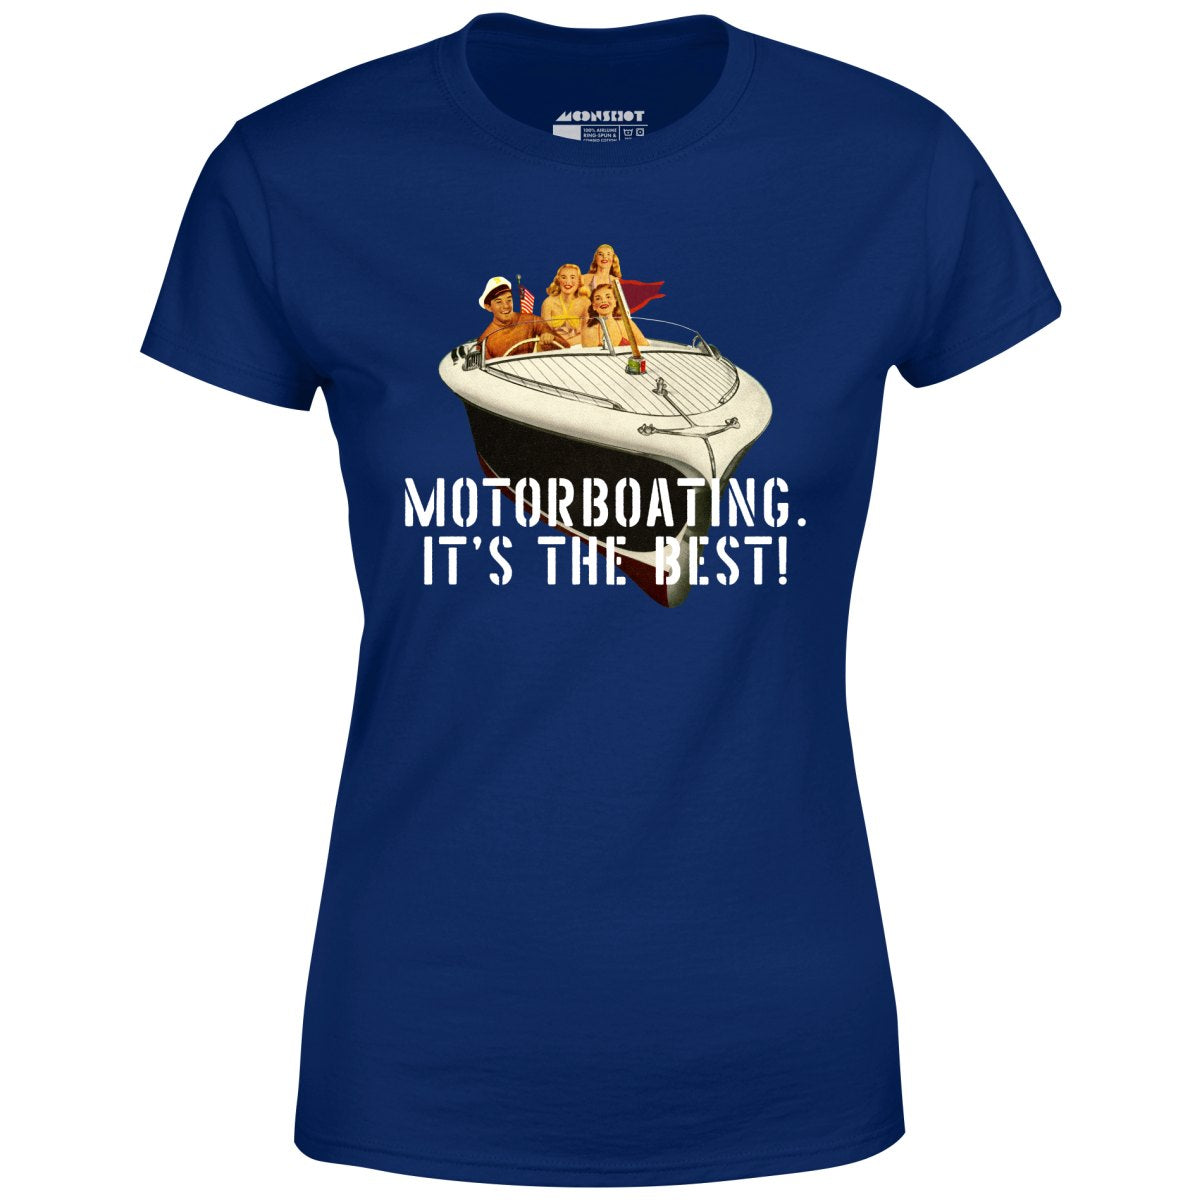 Motorboating It's The Best - Women's T-Shirt